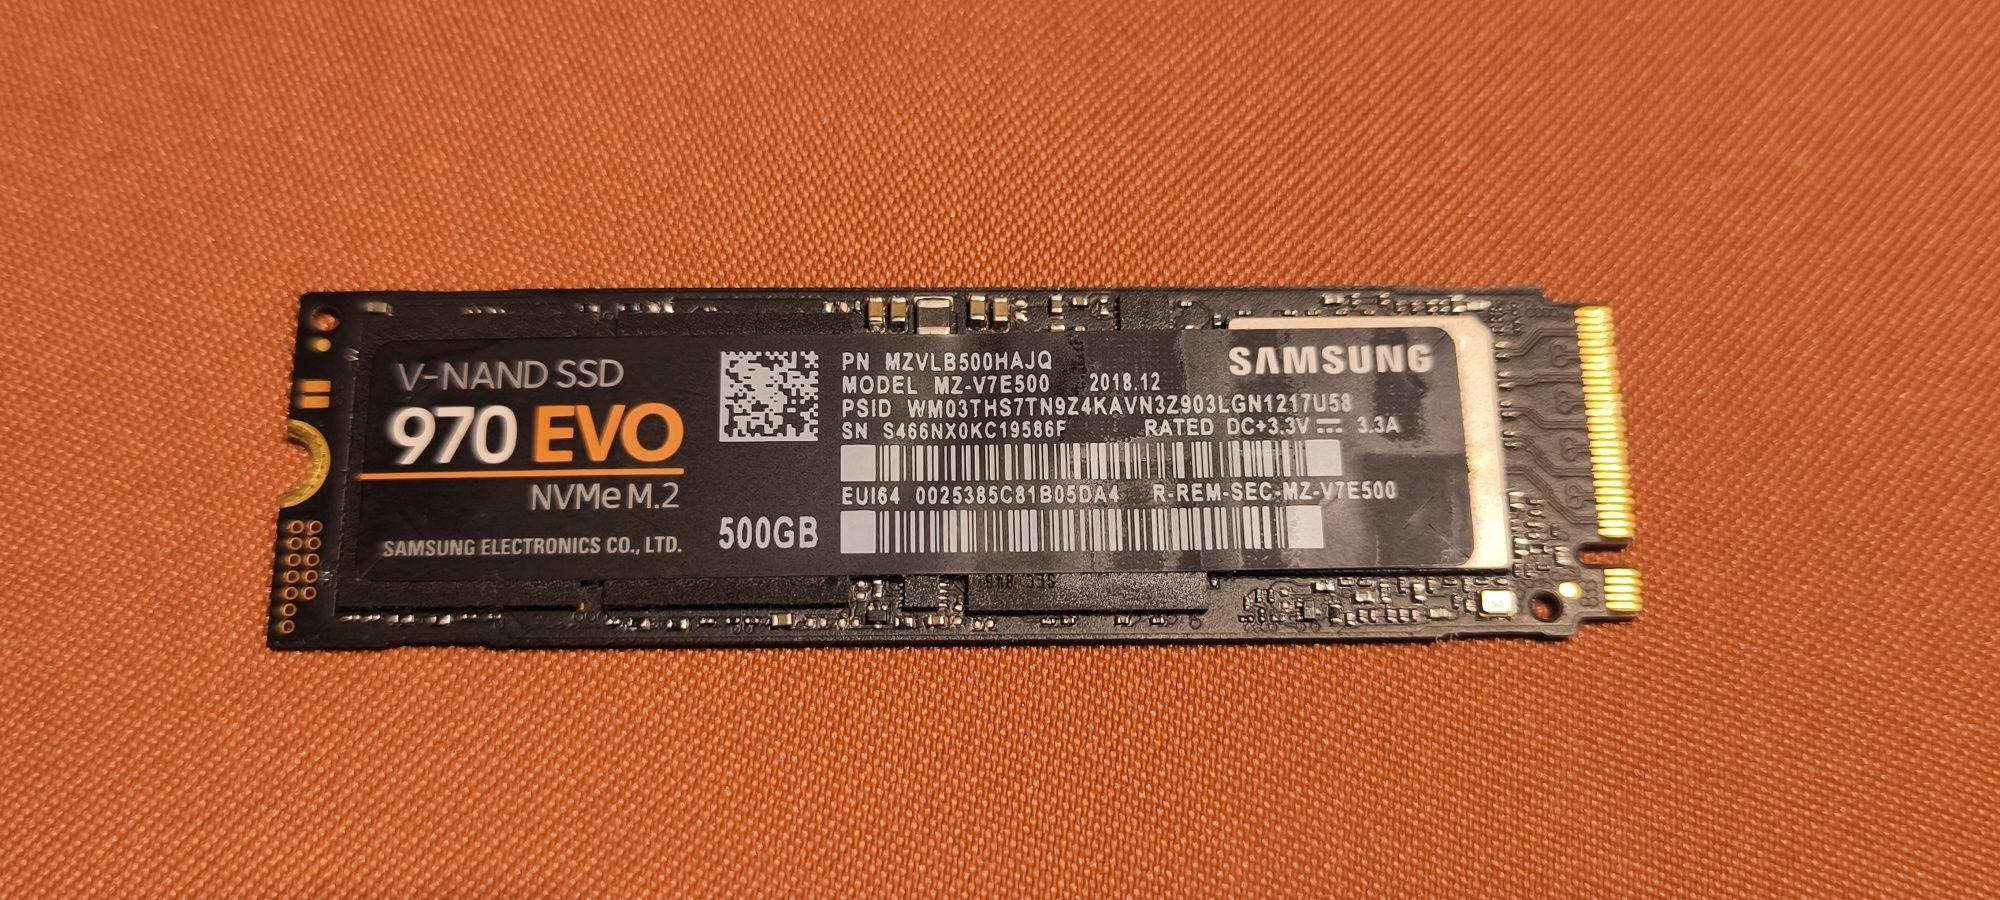 Samsung 970 Evo 500 GB NVMe M.2 SSD